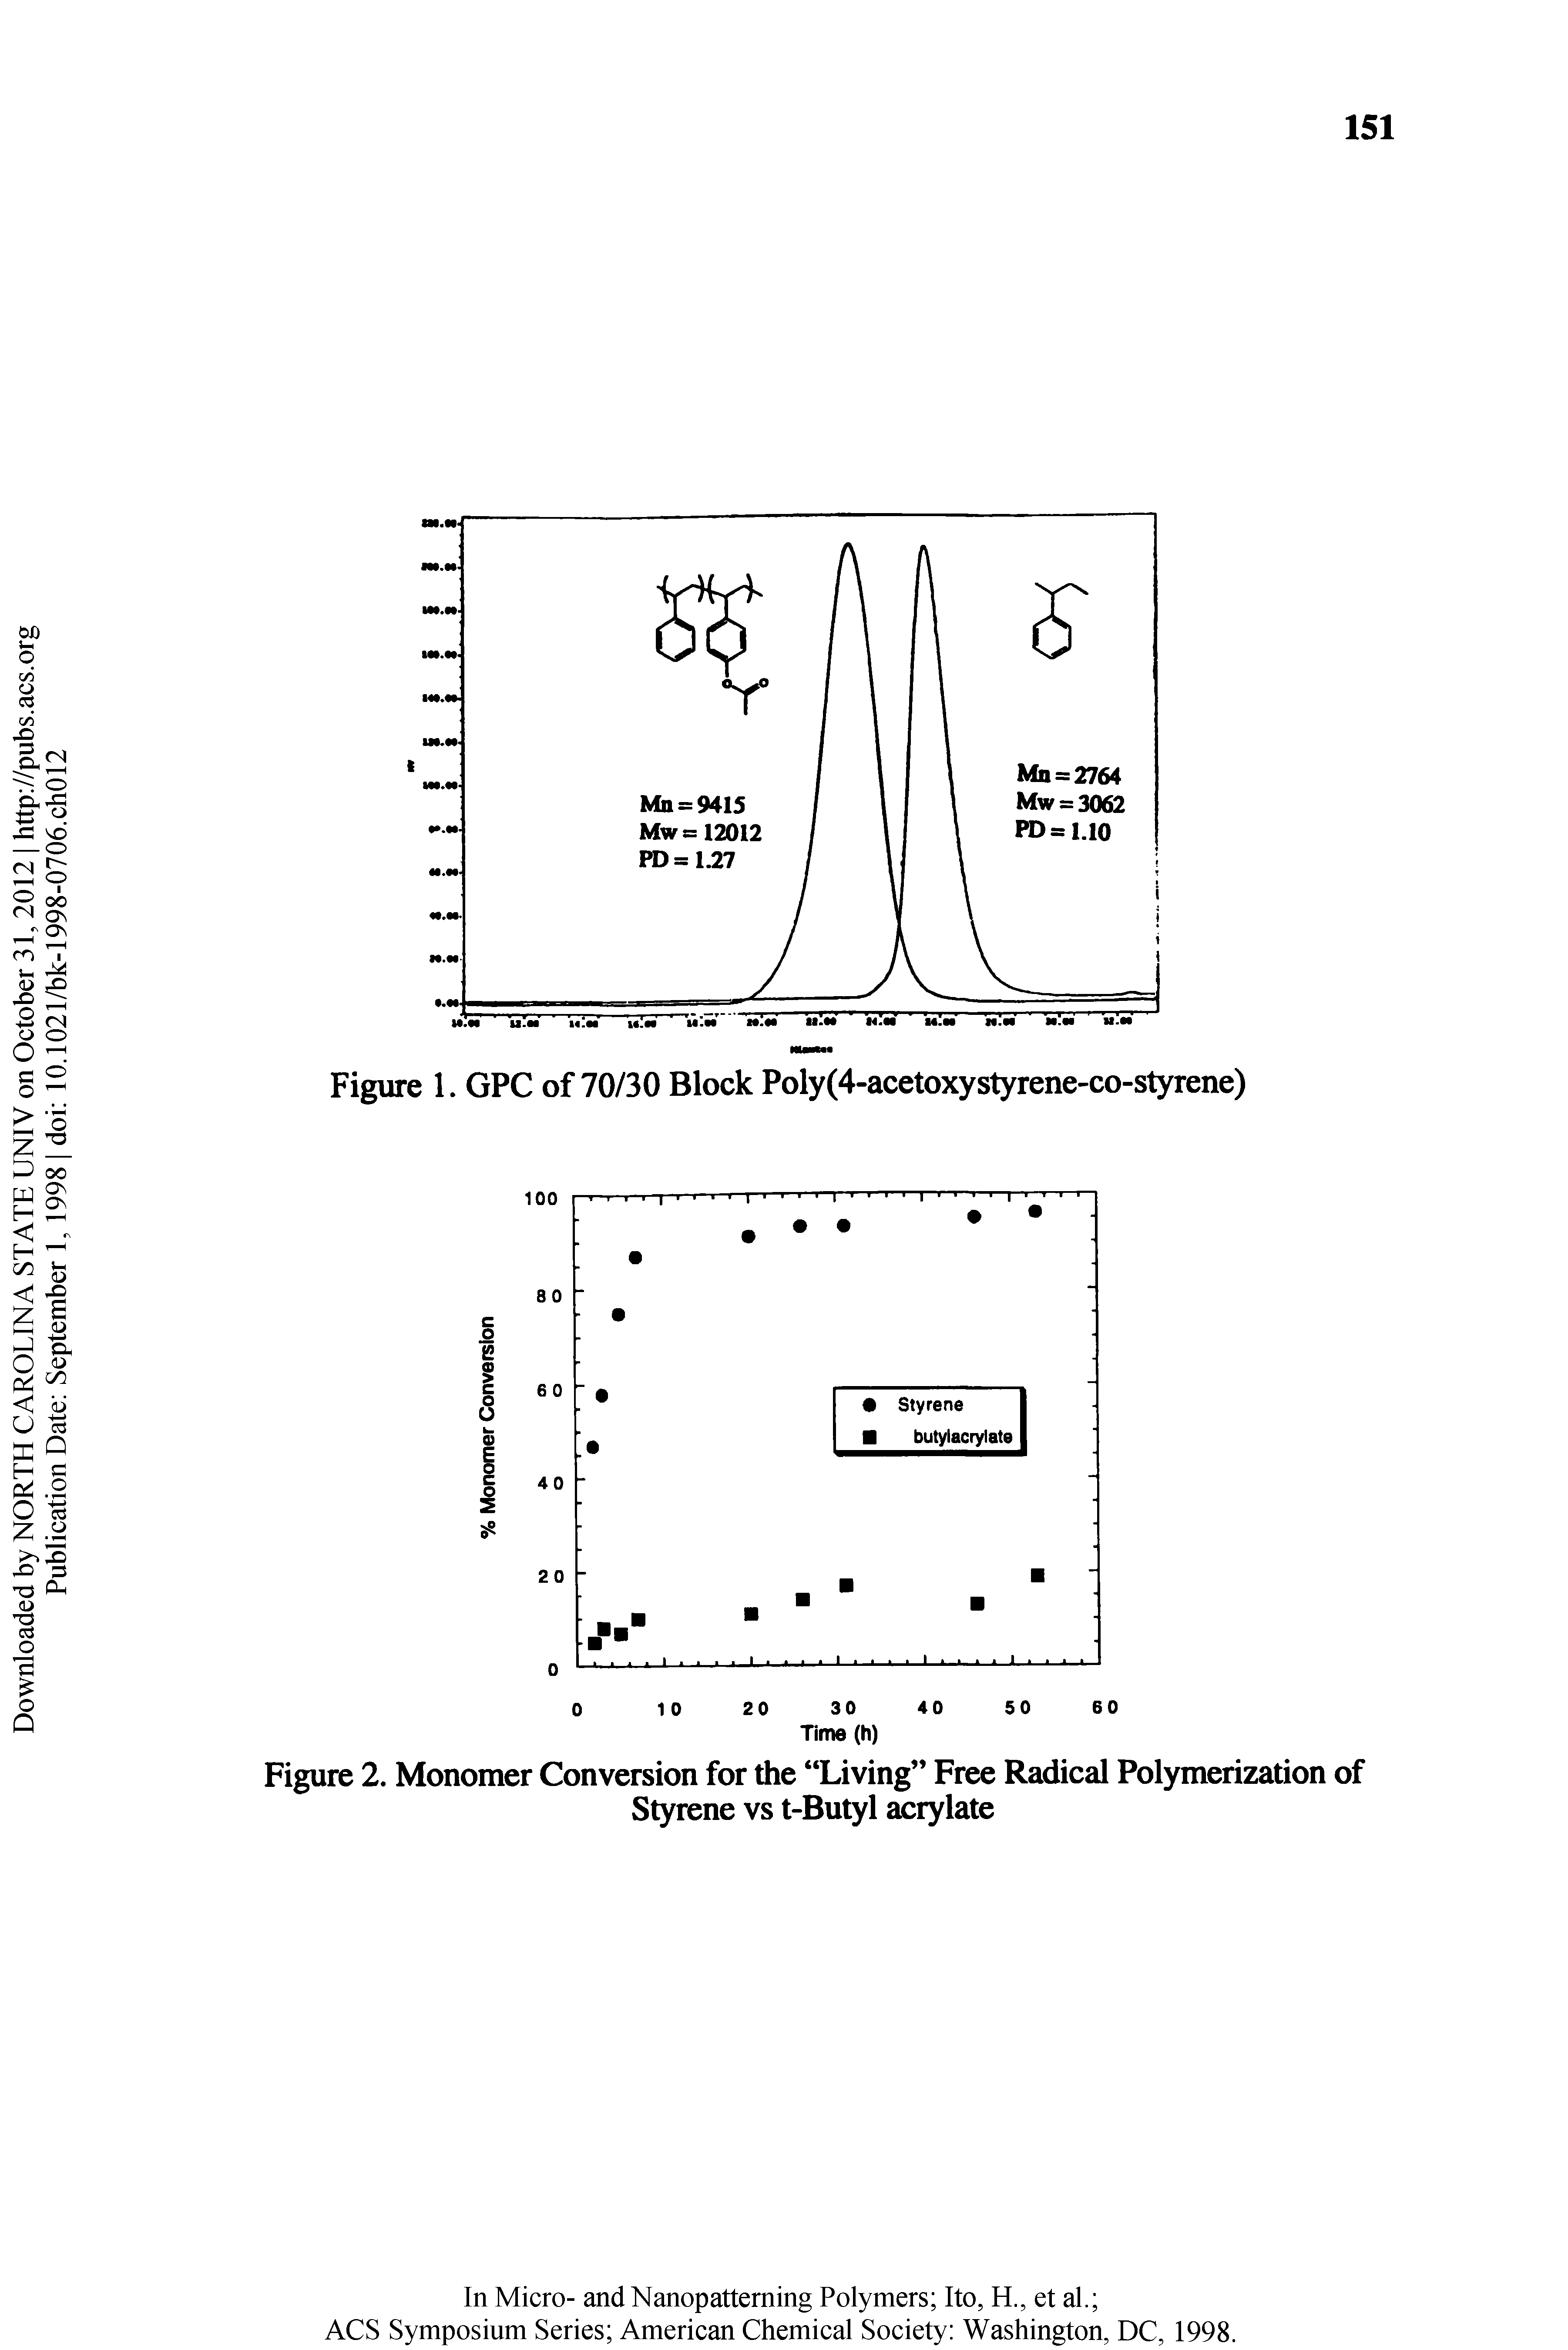 Figure 2. Monomer Conversion for the Living Free Radical Polymerization of Styrene vs t-Butyl acrylate...